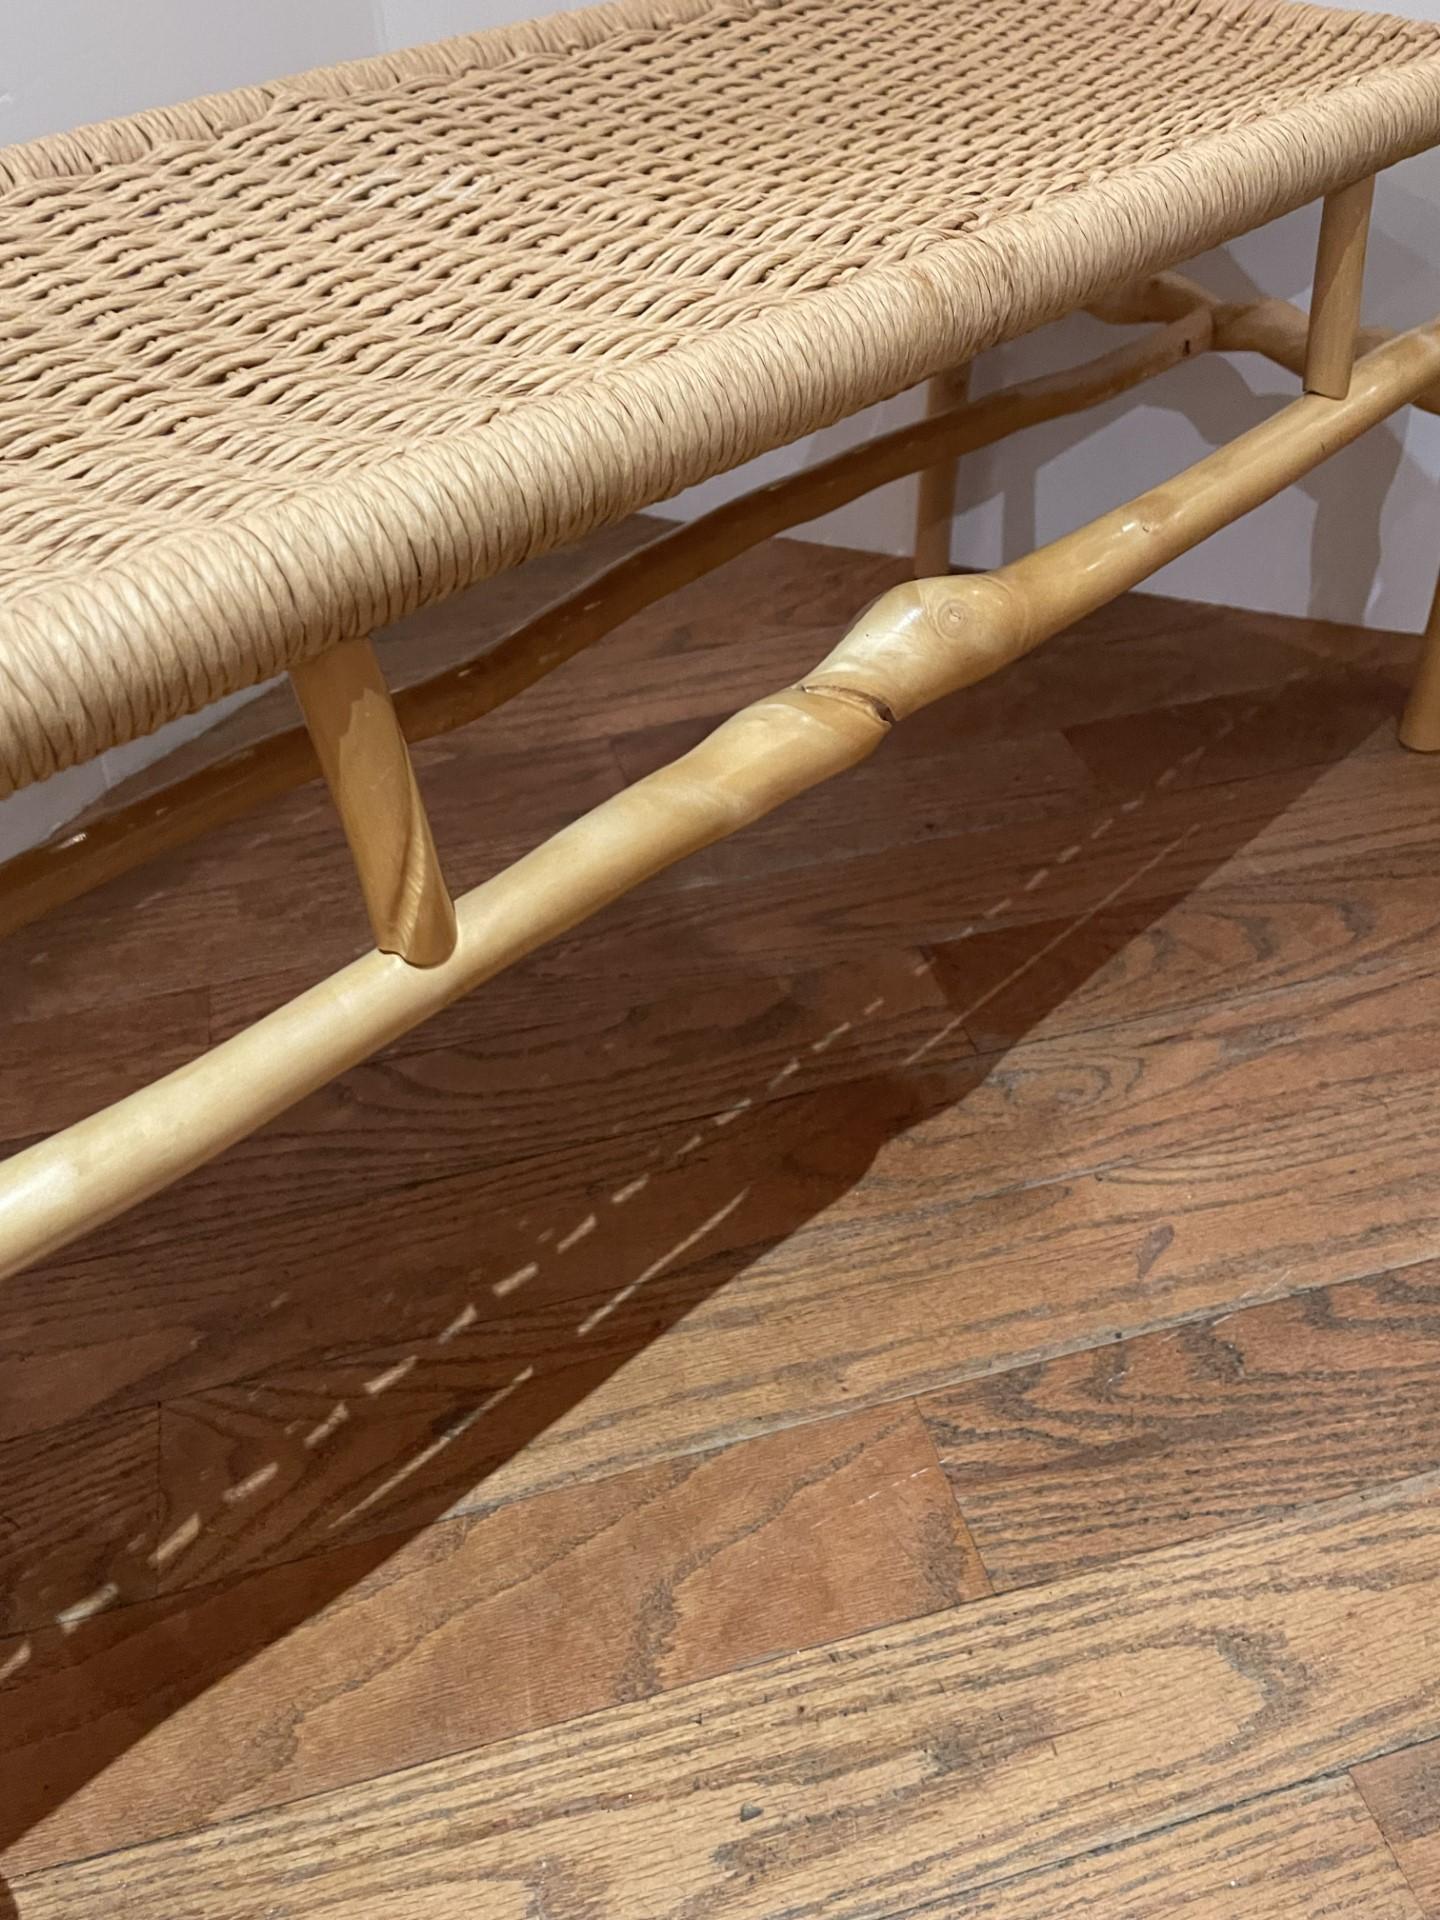 American Craftsman  The Twisted Sassafras Wood & Rush Seat Bench, by Studio  Artist, David Ebner  For Sale